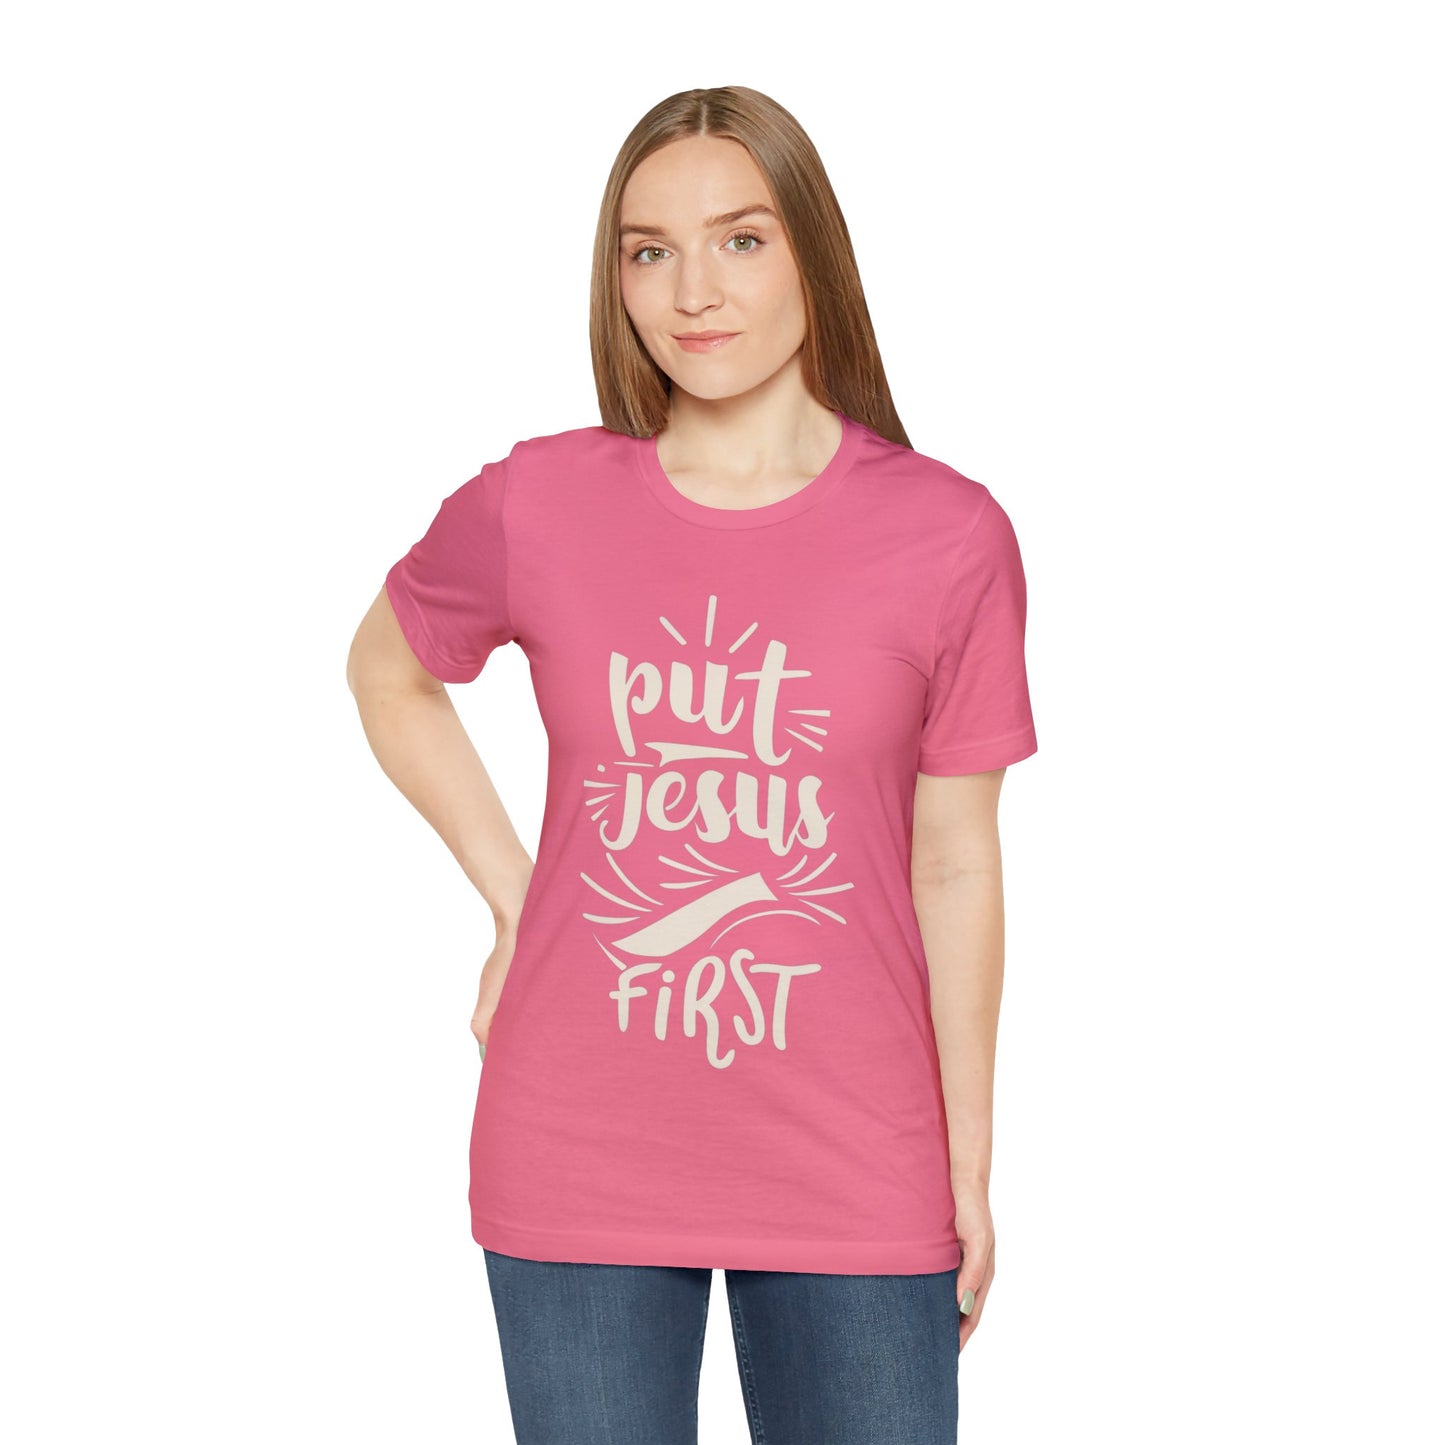 Put Jesus First v4 - Unisex T-Shirt